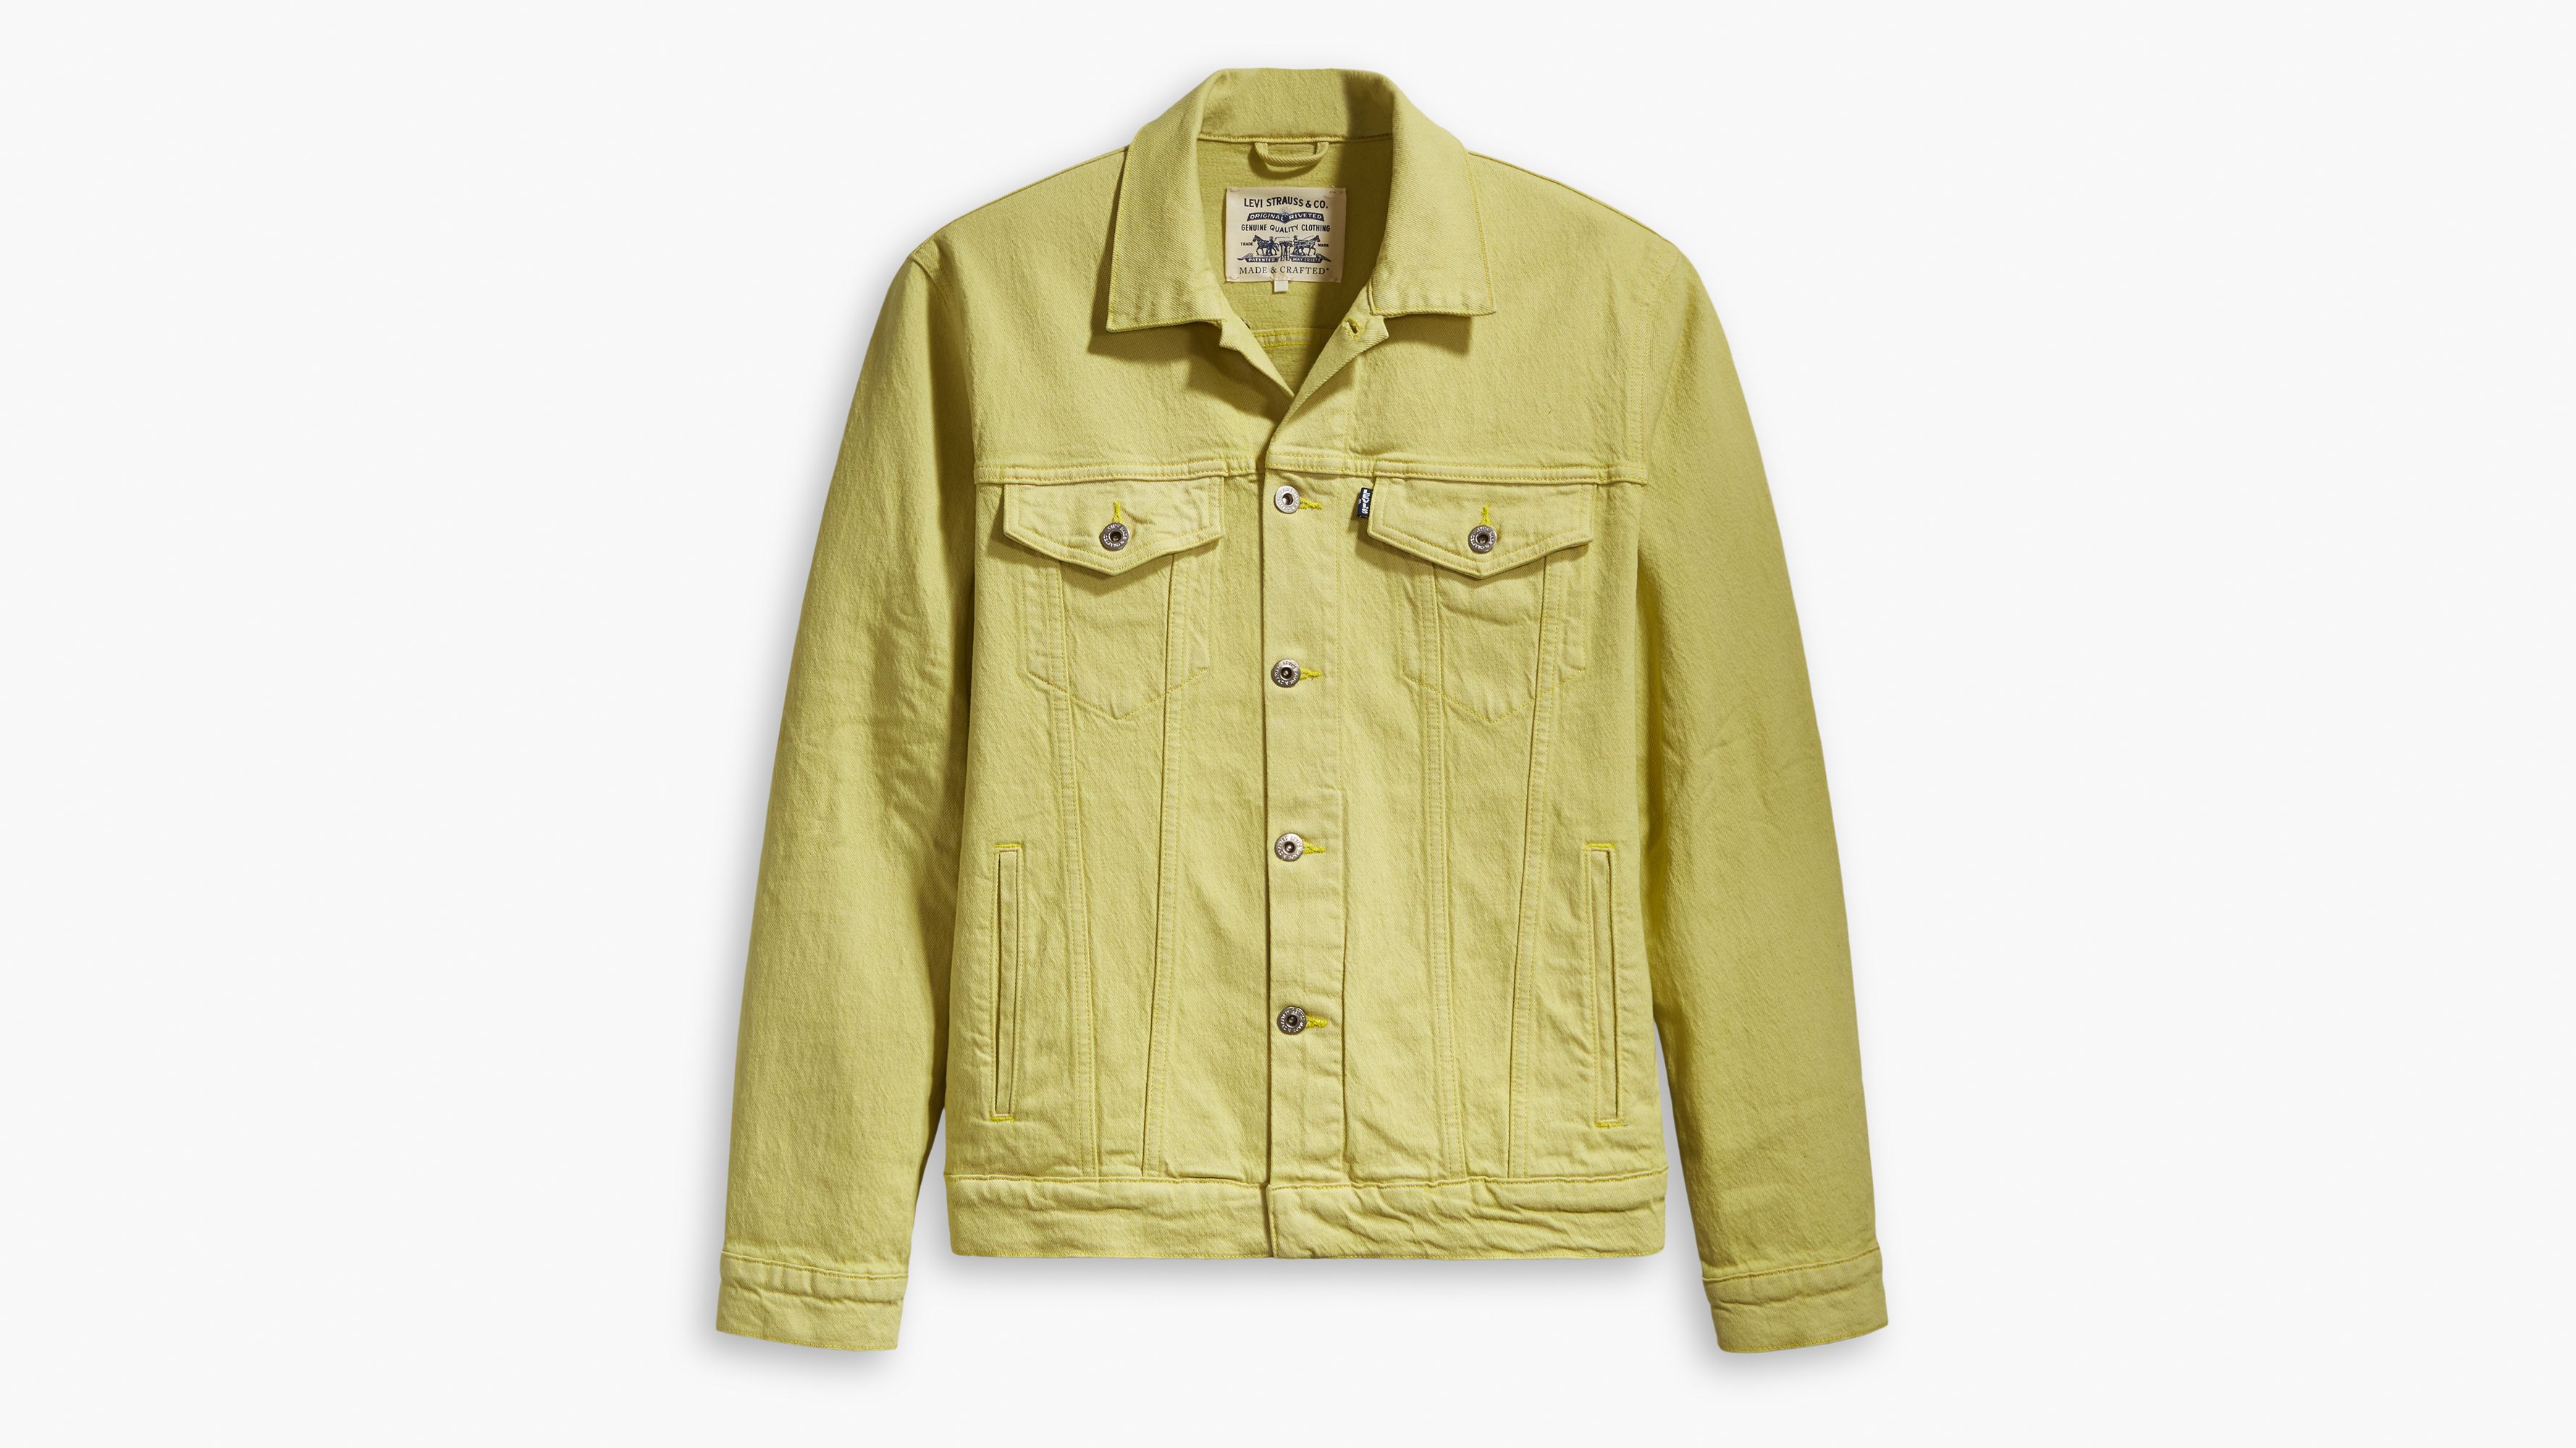 yellow levis jacket